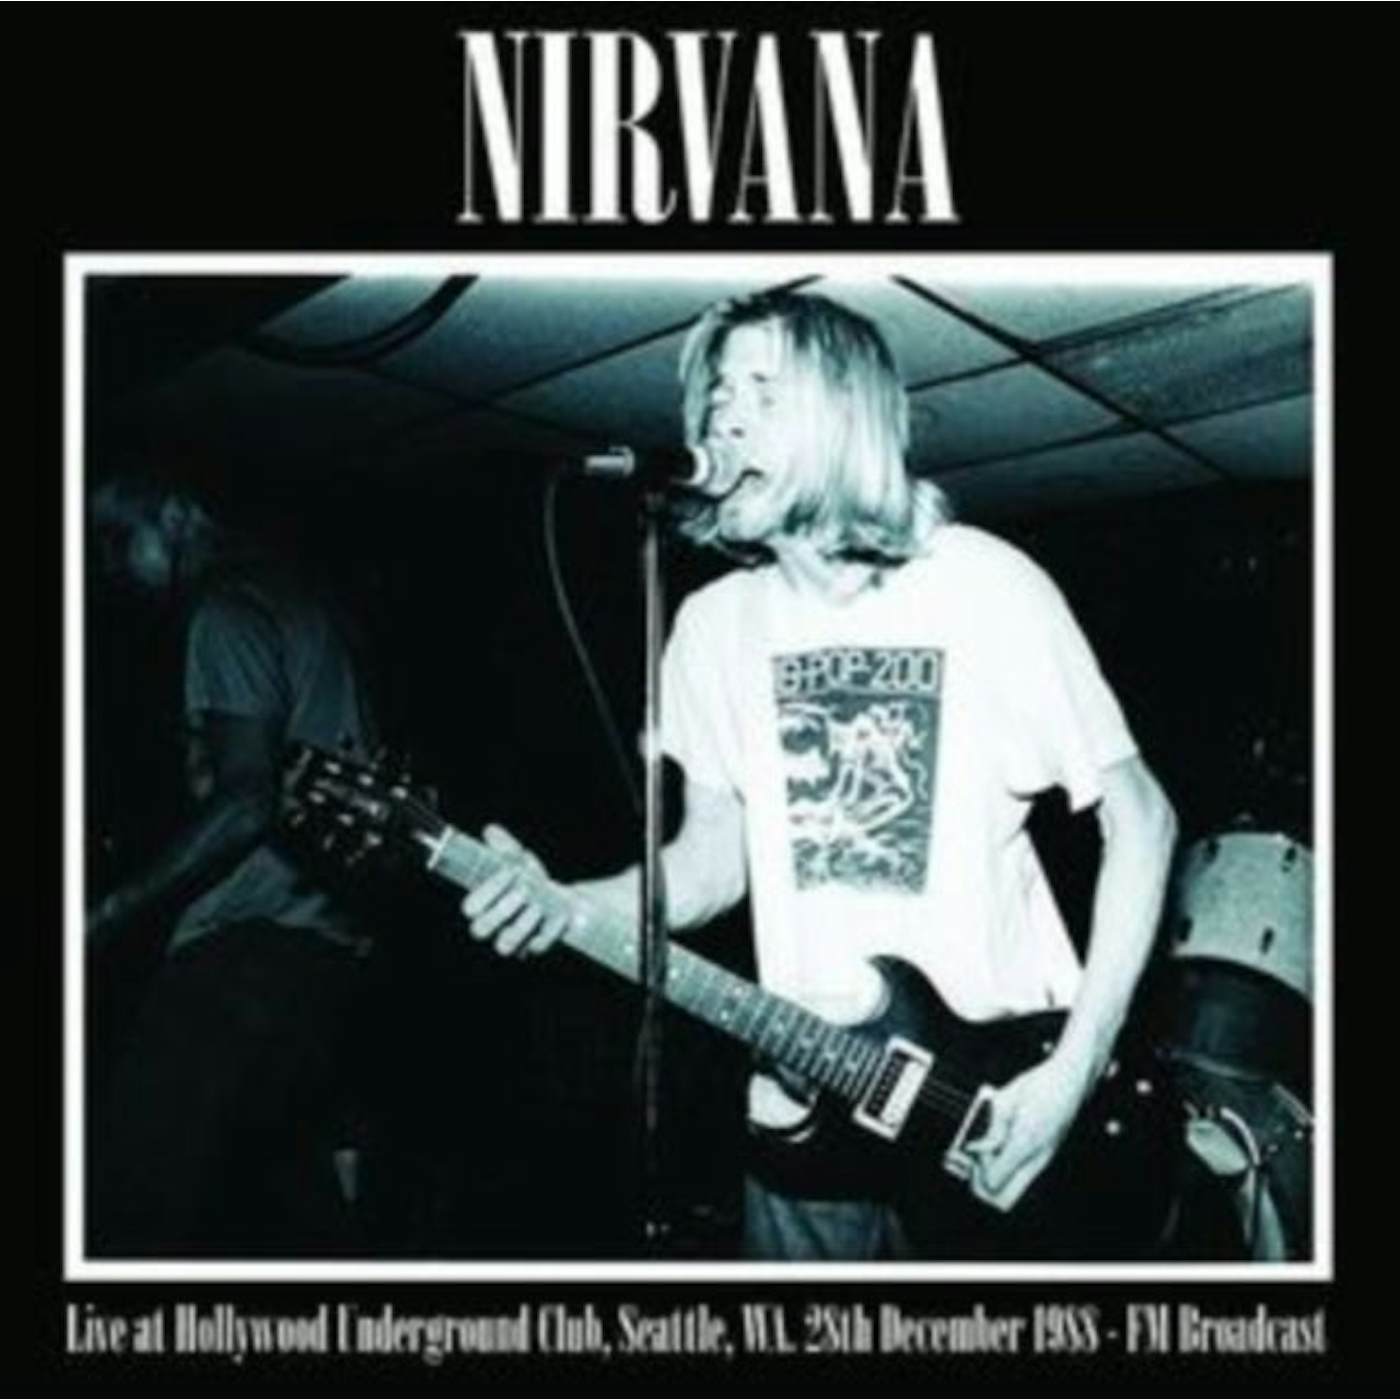 Nirvana LP Vinyl Record - Live At Hollywood Underground Club. Seattle. Wa 28Th December 19 88